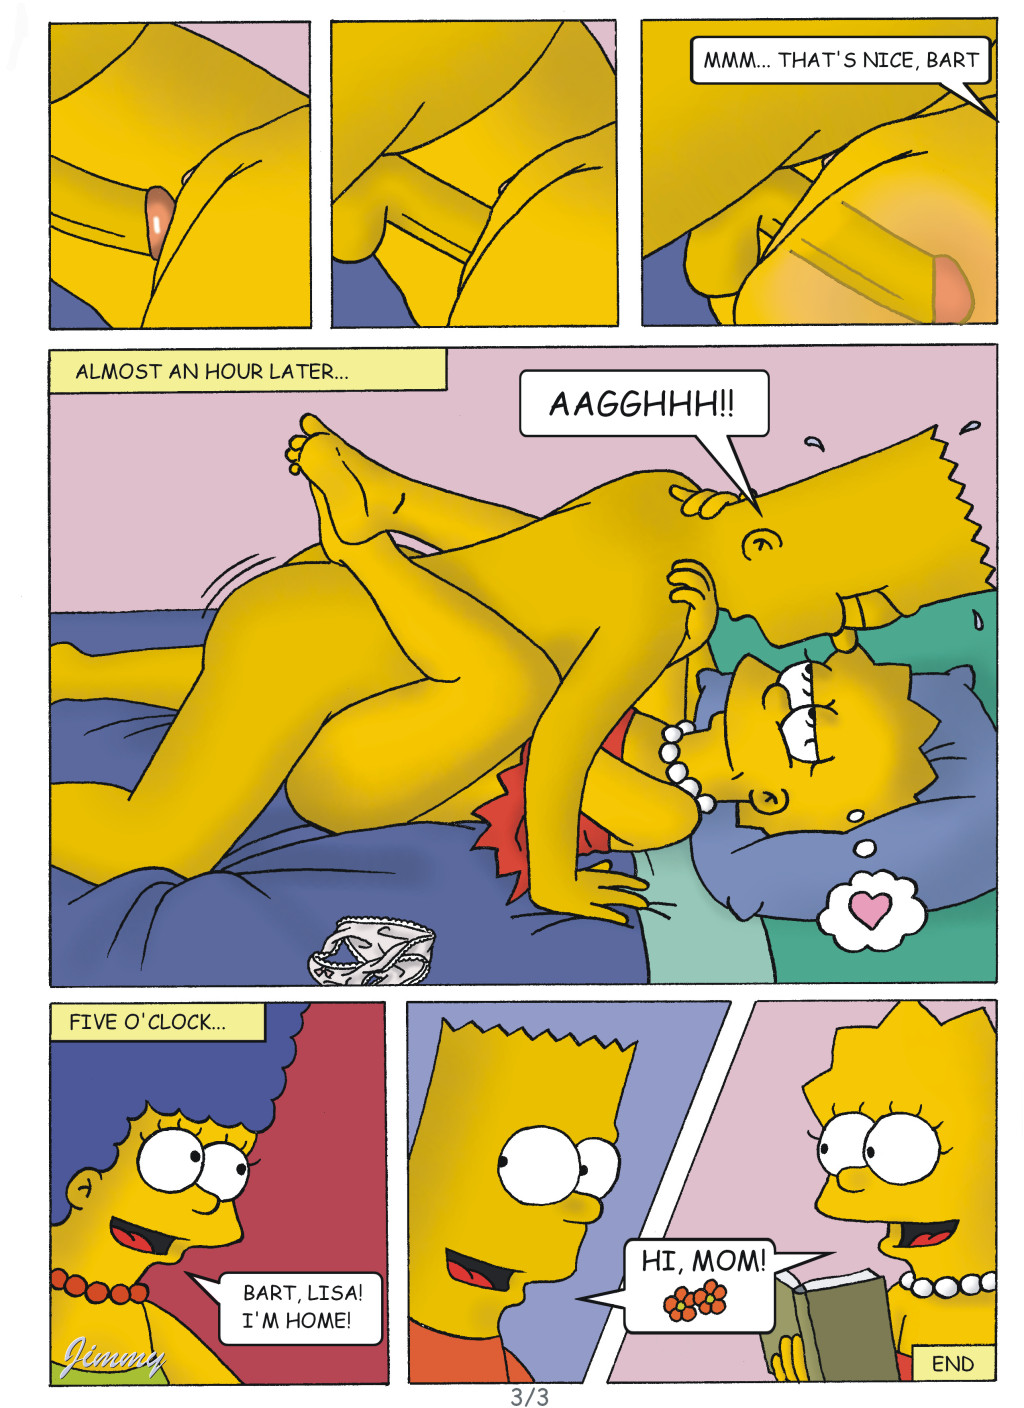 #pic80298: Bart Simpson - Jimmy - Lisa Simpson - The Simpsons - comic.